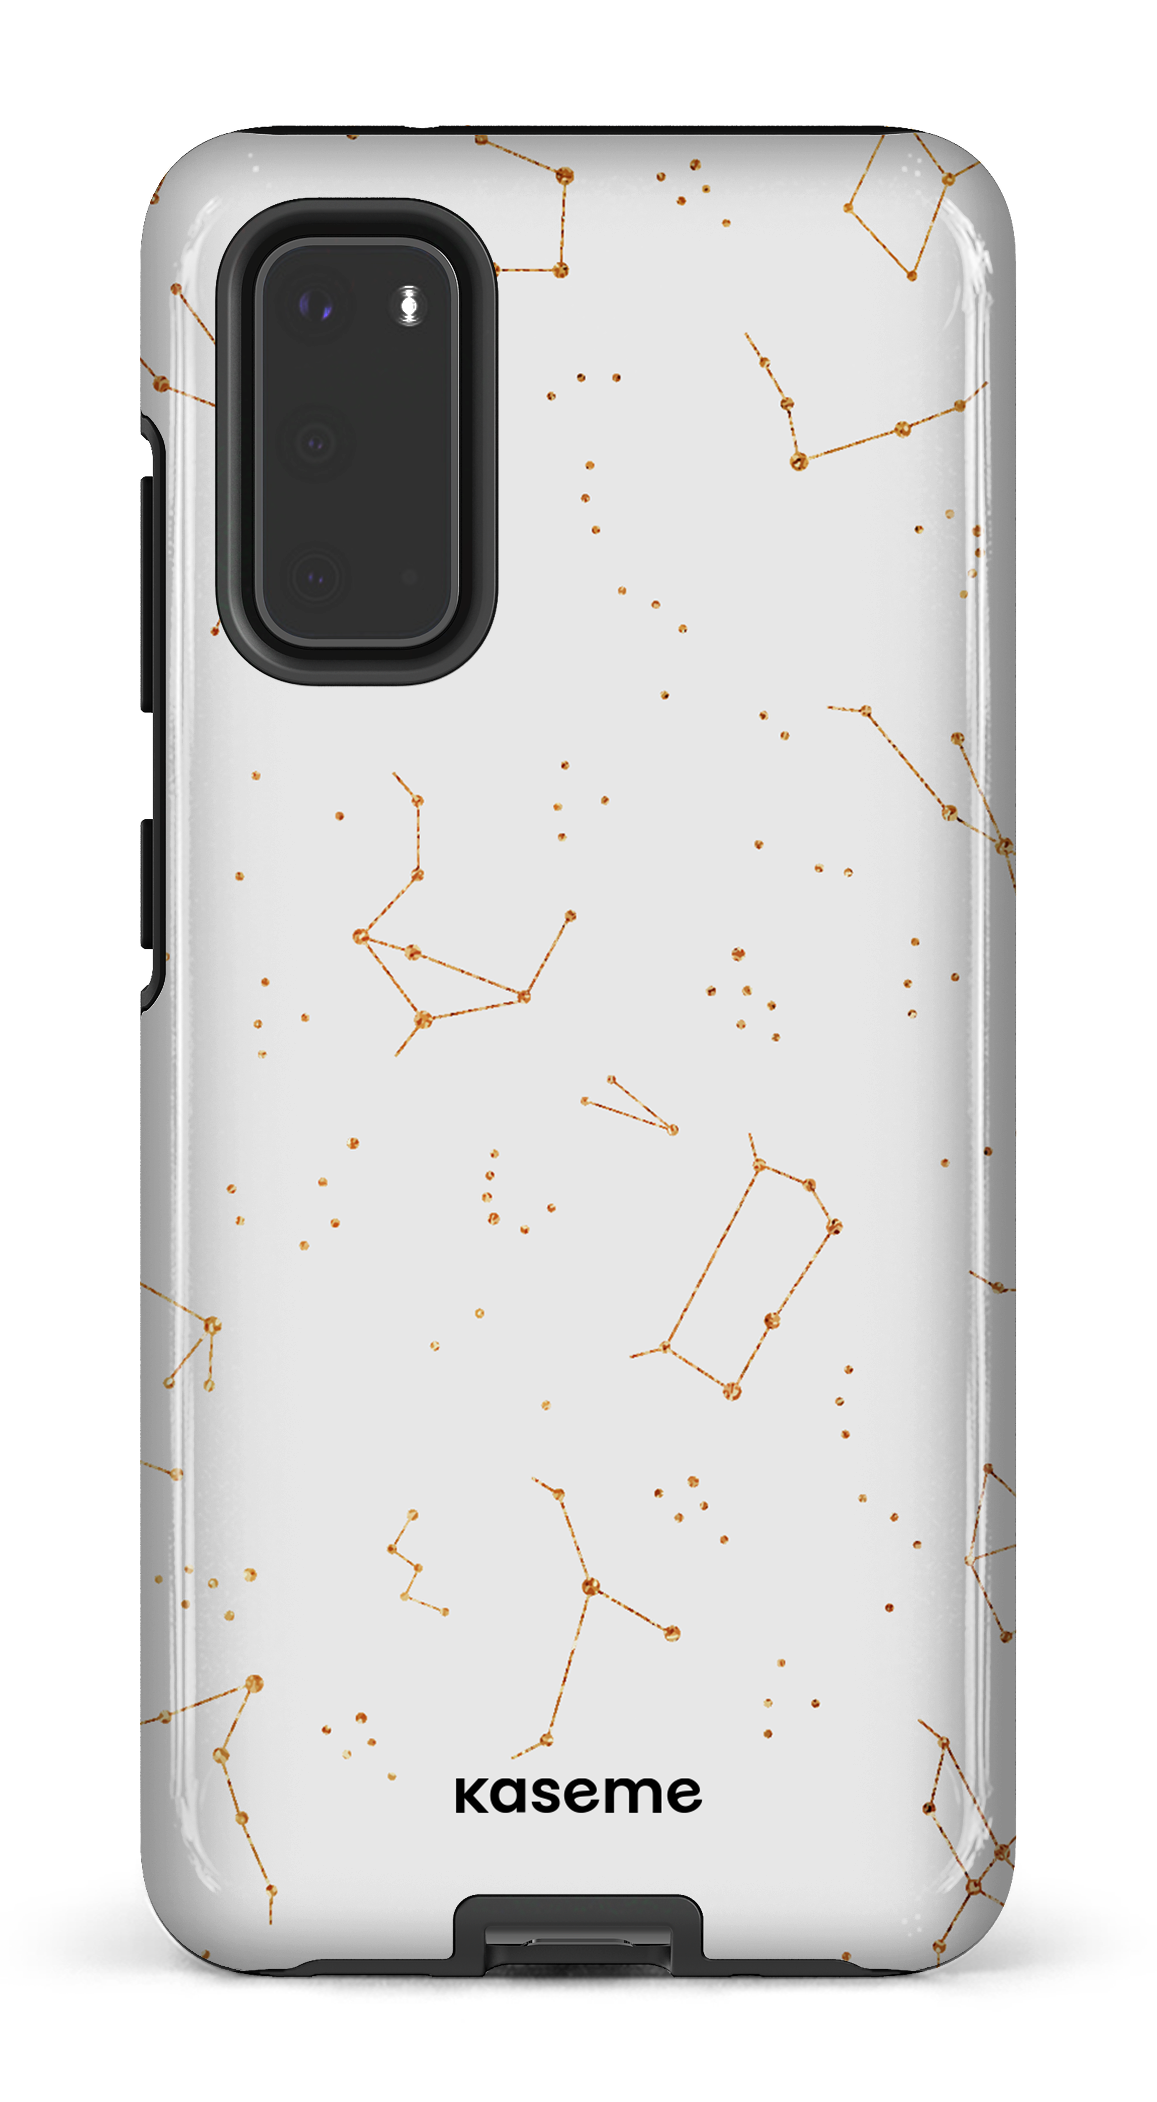 Stardust sky - Galaxy S20